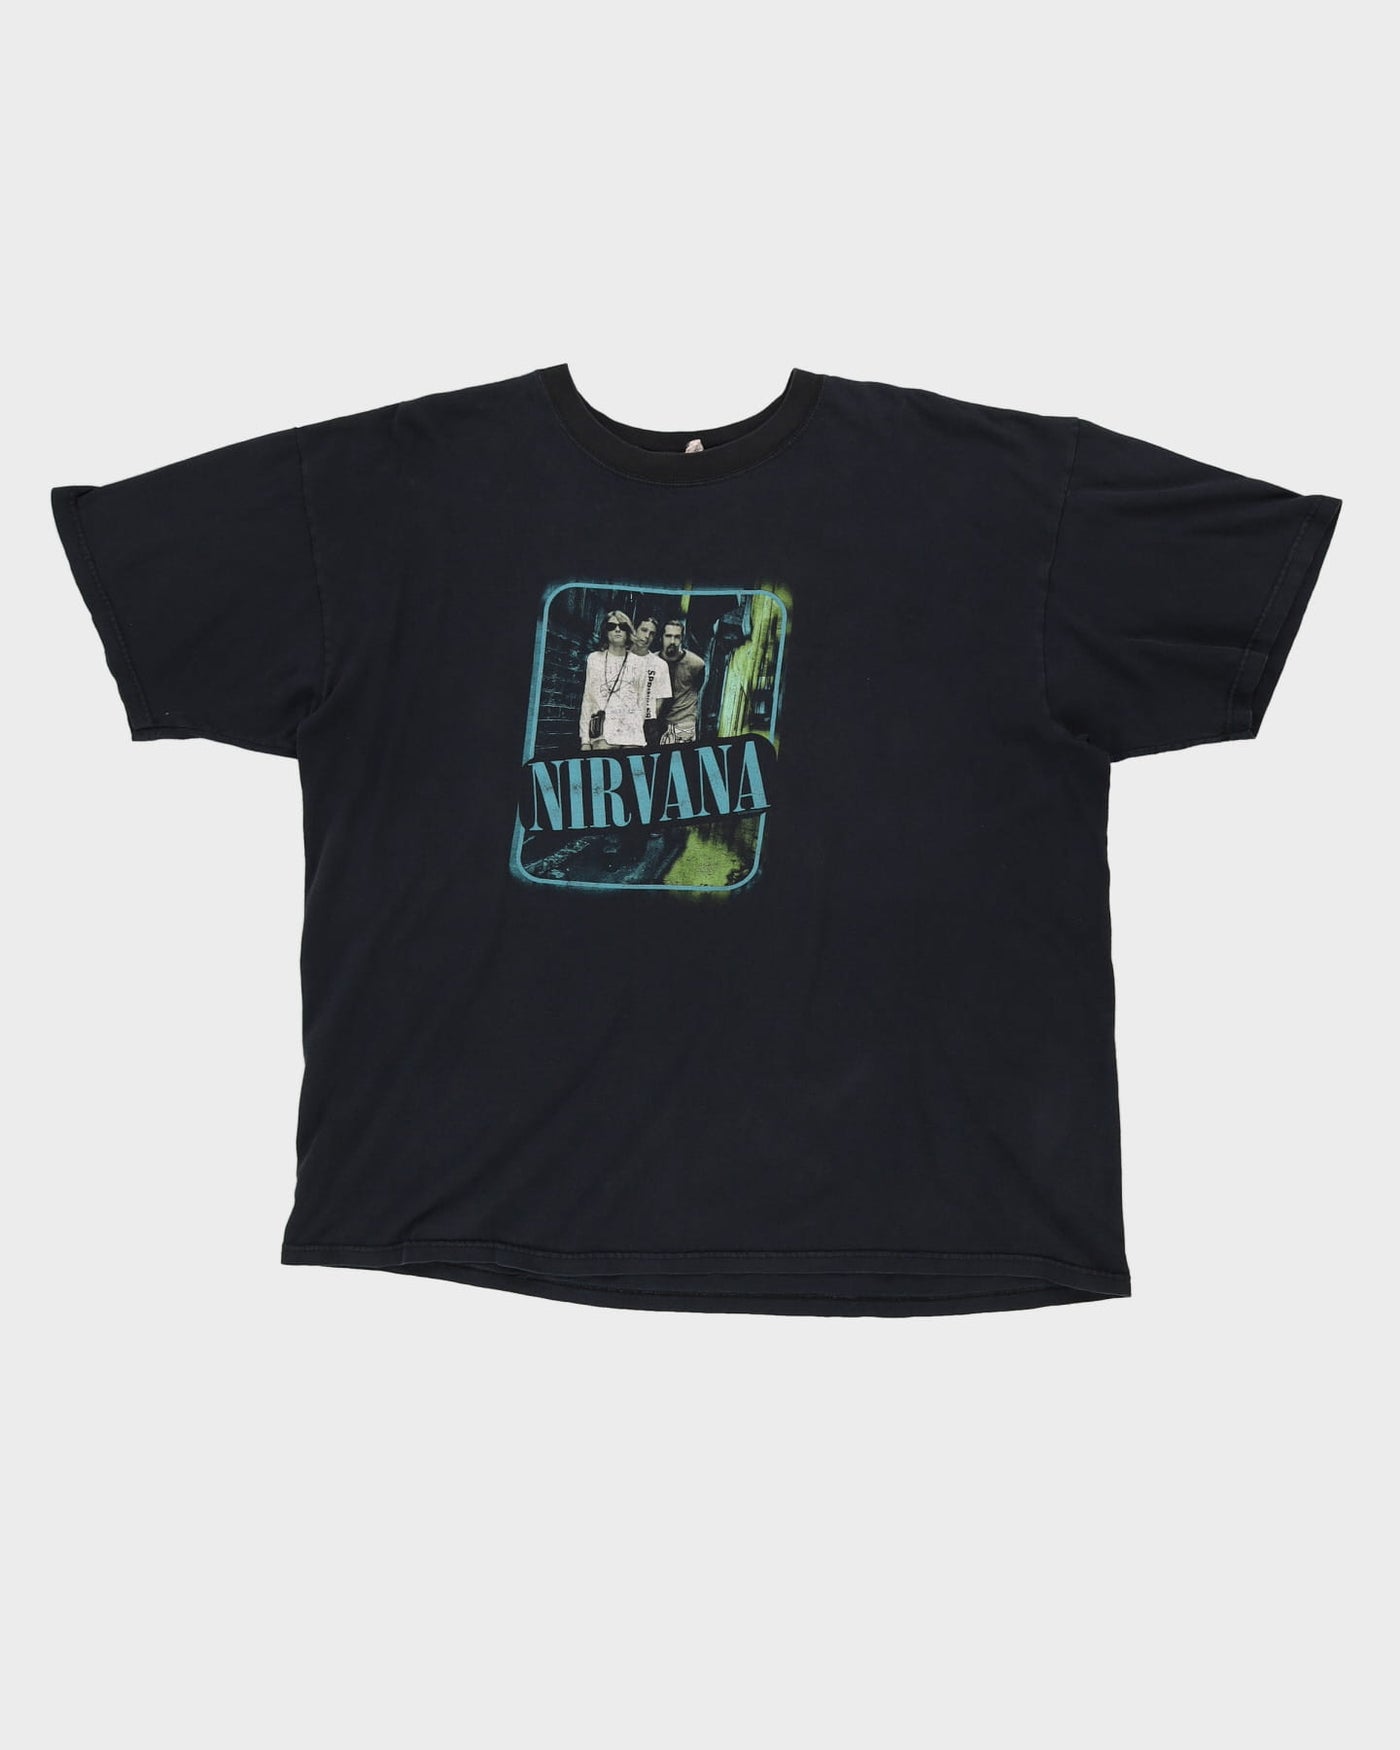 00s Nirvana Faded Black Band T-Shirt - XXL